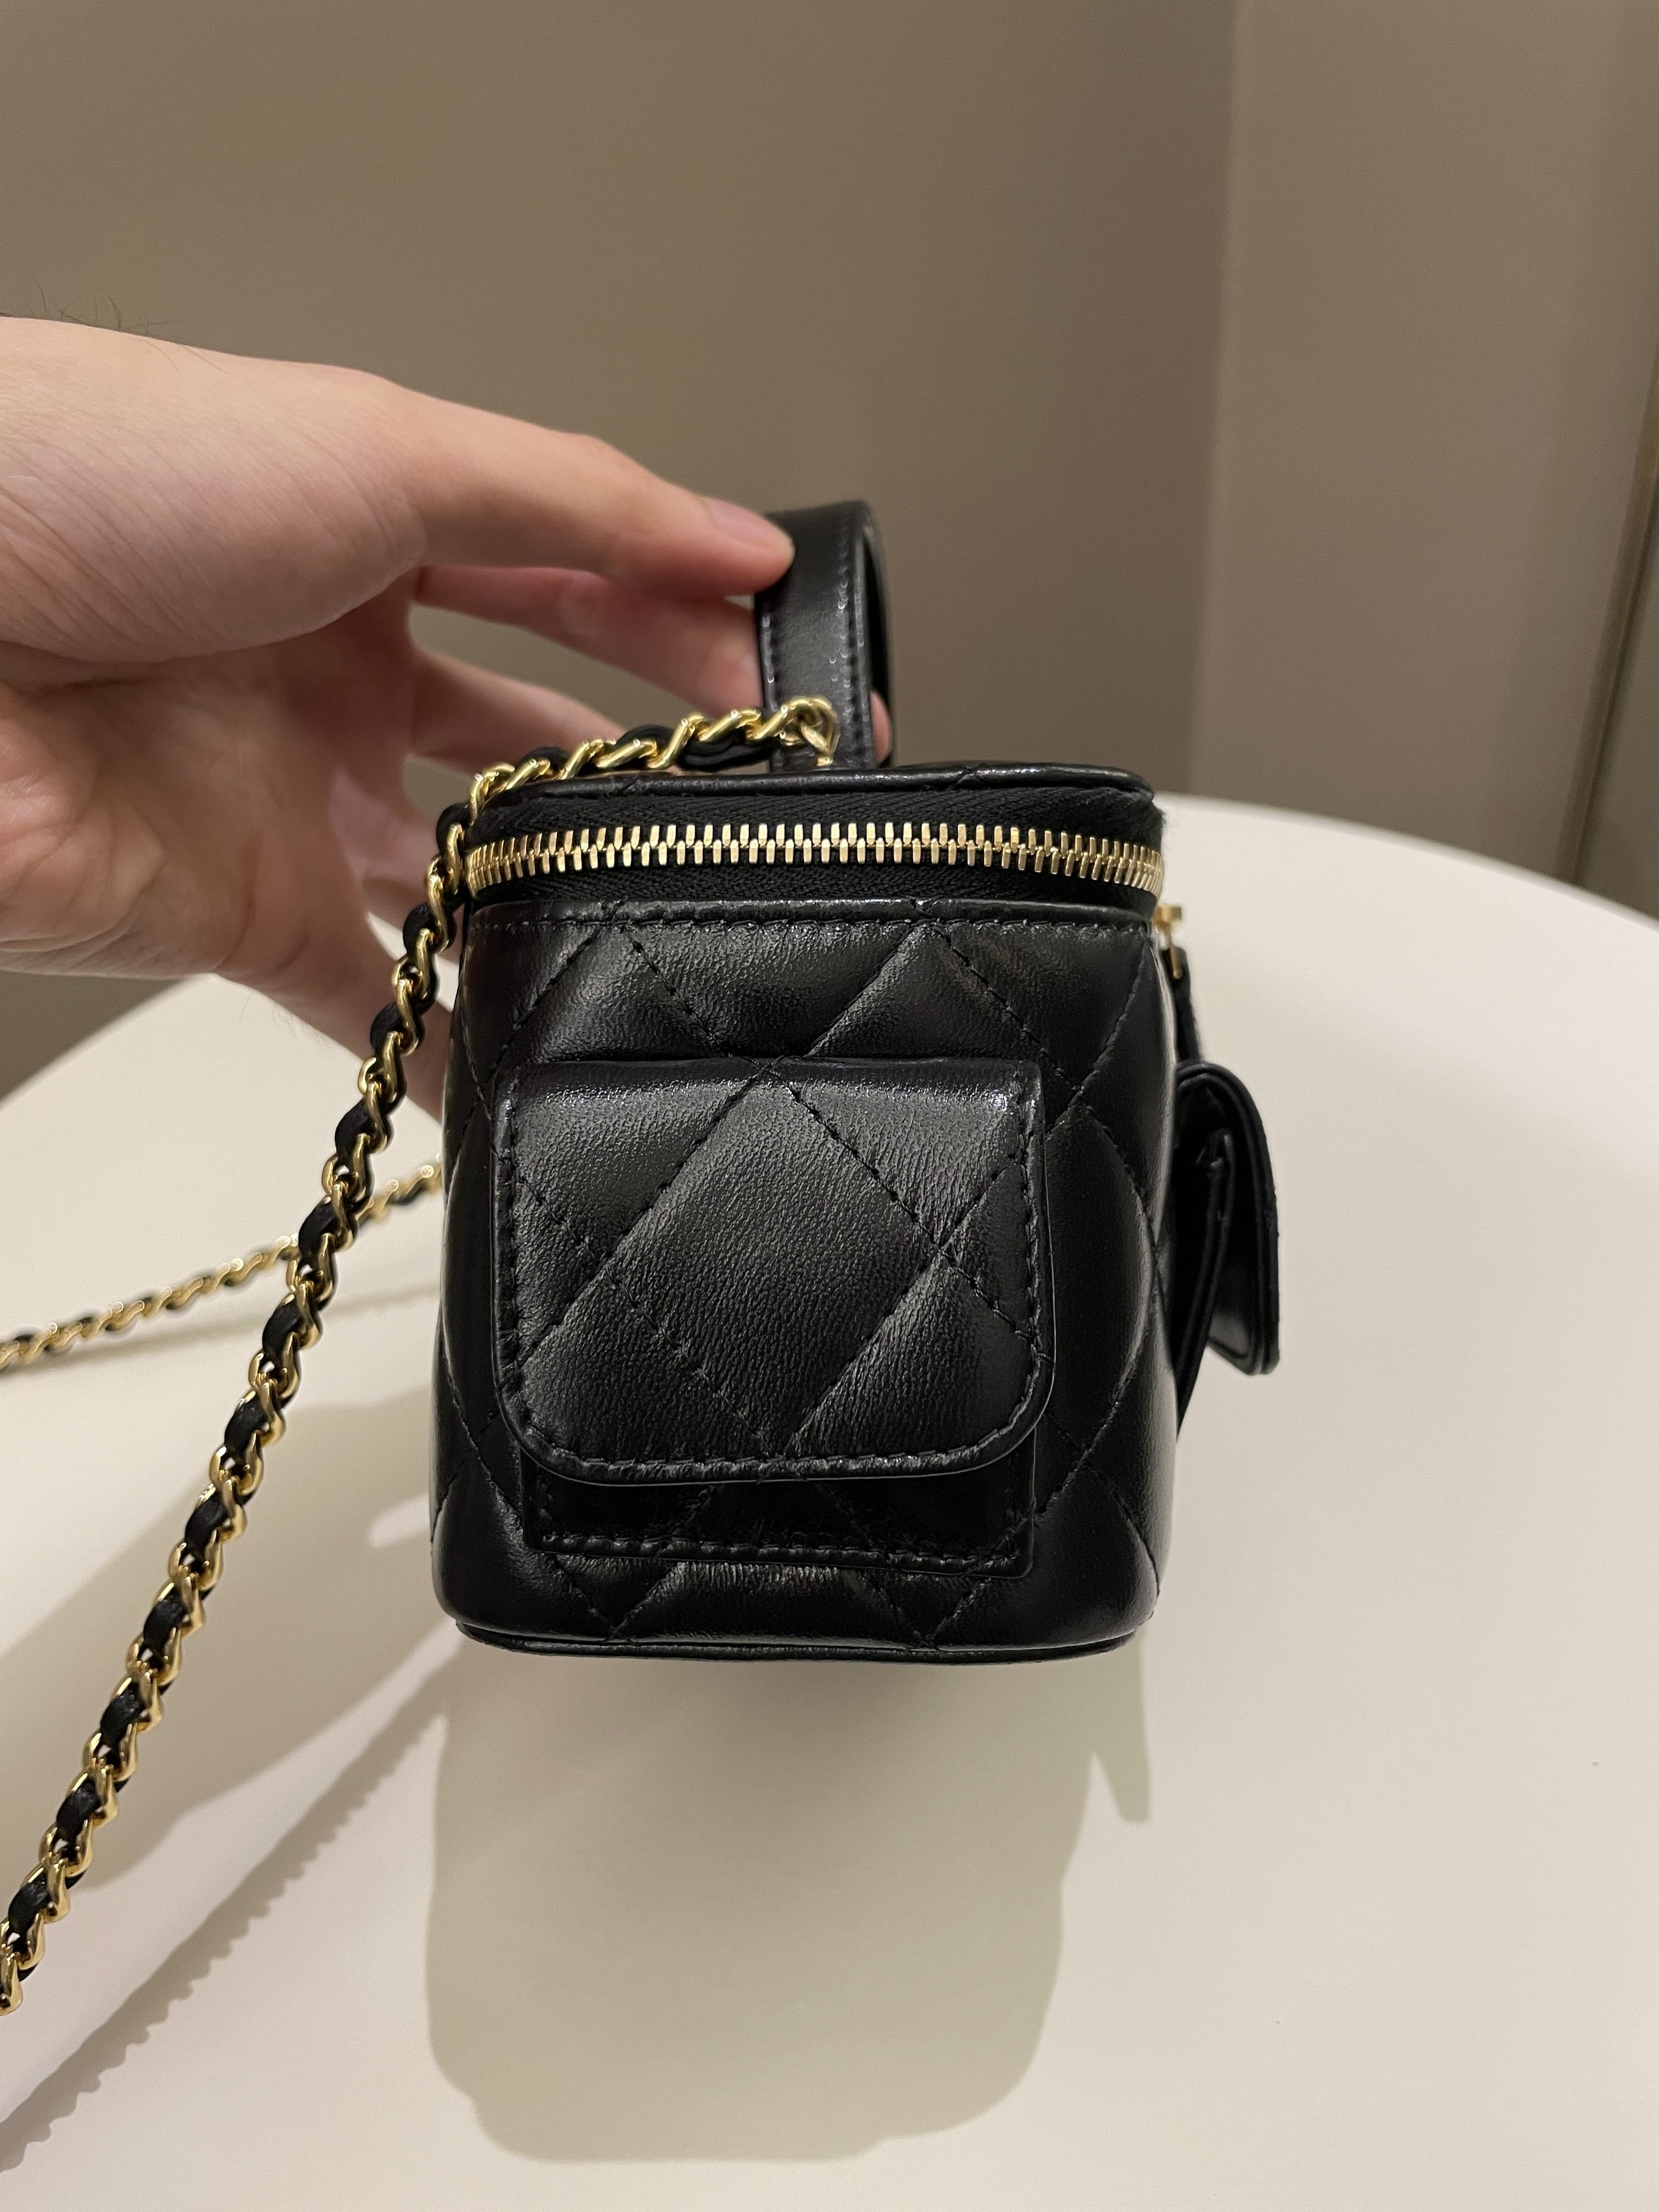 Chanel Polly Pocket Multi Pocket Vanity Case Bag Black Glazed Lambskin